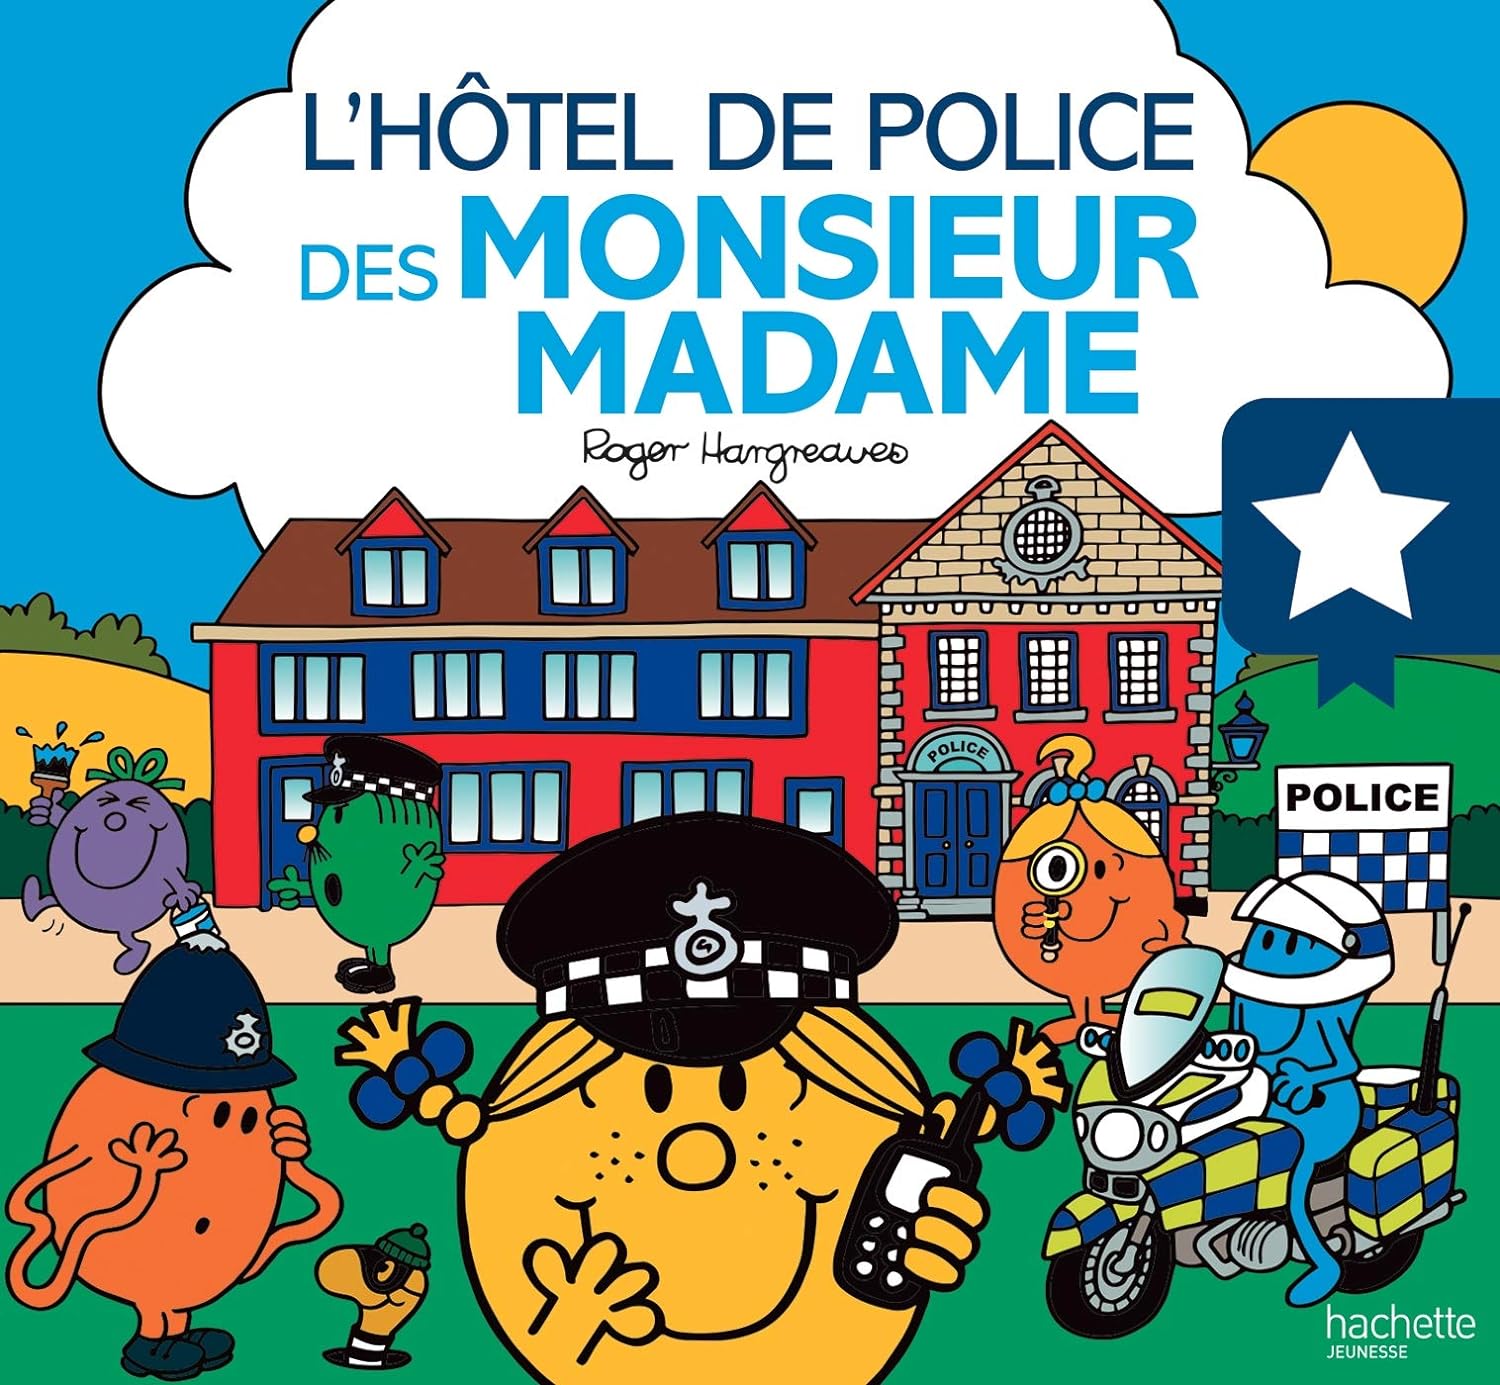 MONSIEUR MADAME-L'HOTEL DE POLICE DES MONSIEUR MADAME